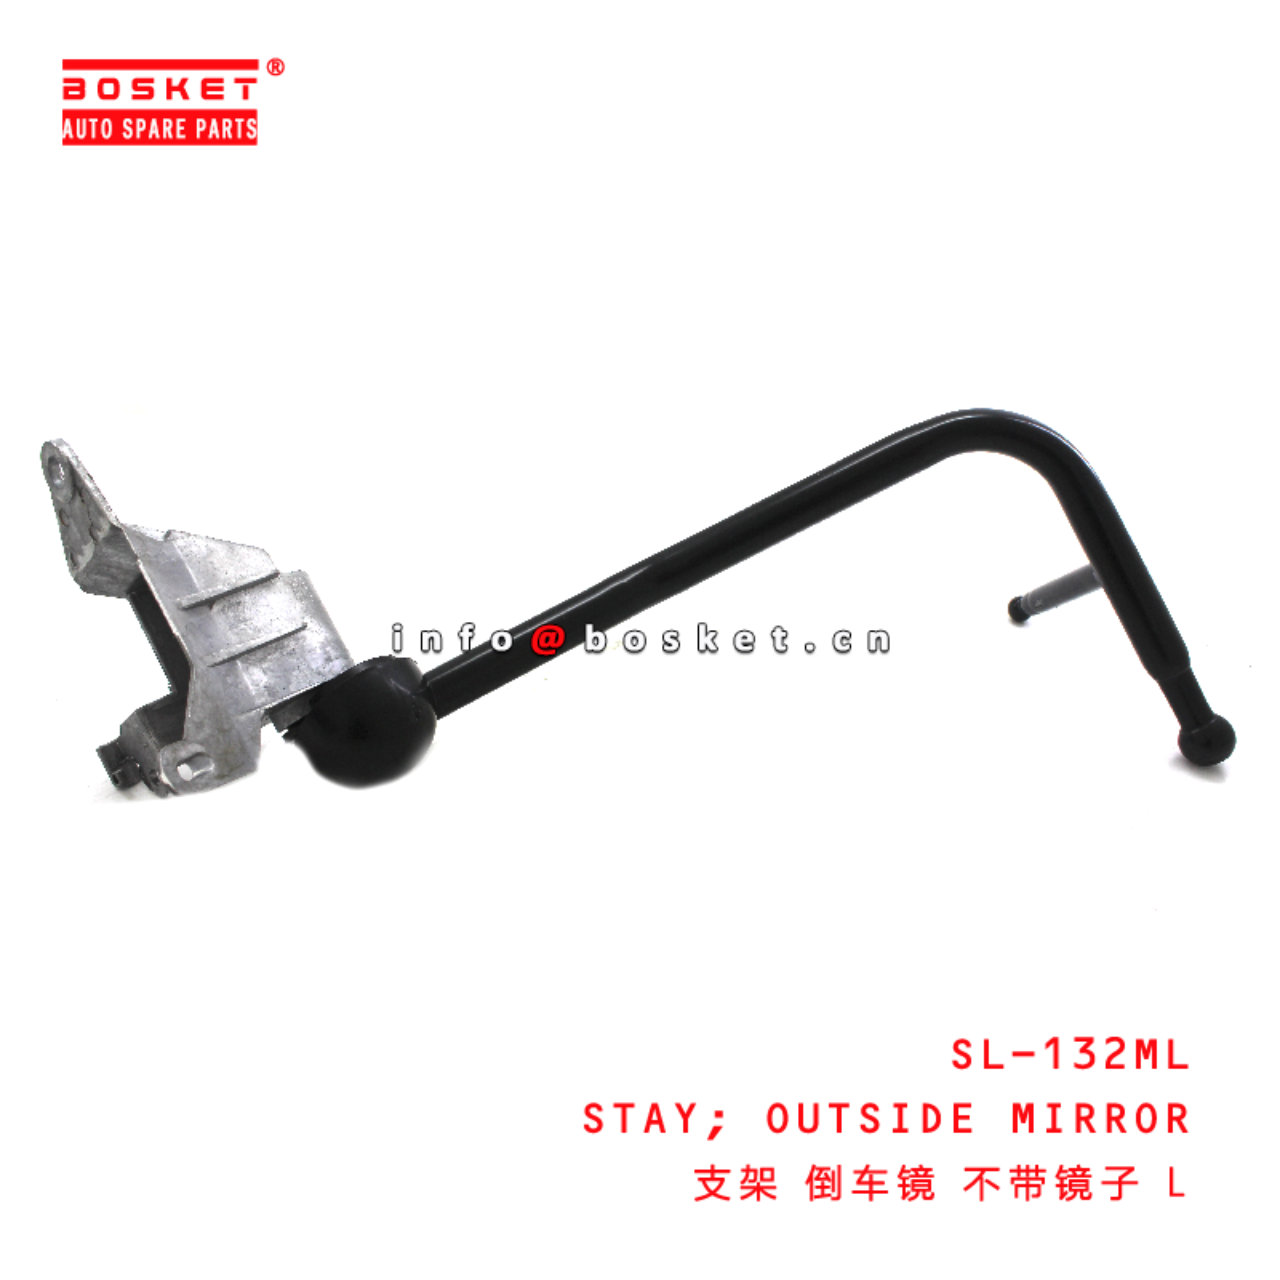 1471266980 1-47126698-0 Standard Front Brake Shoe Lining Sutiable 